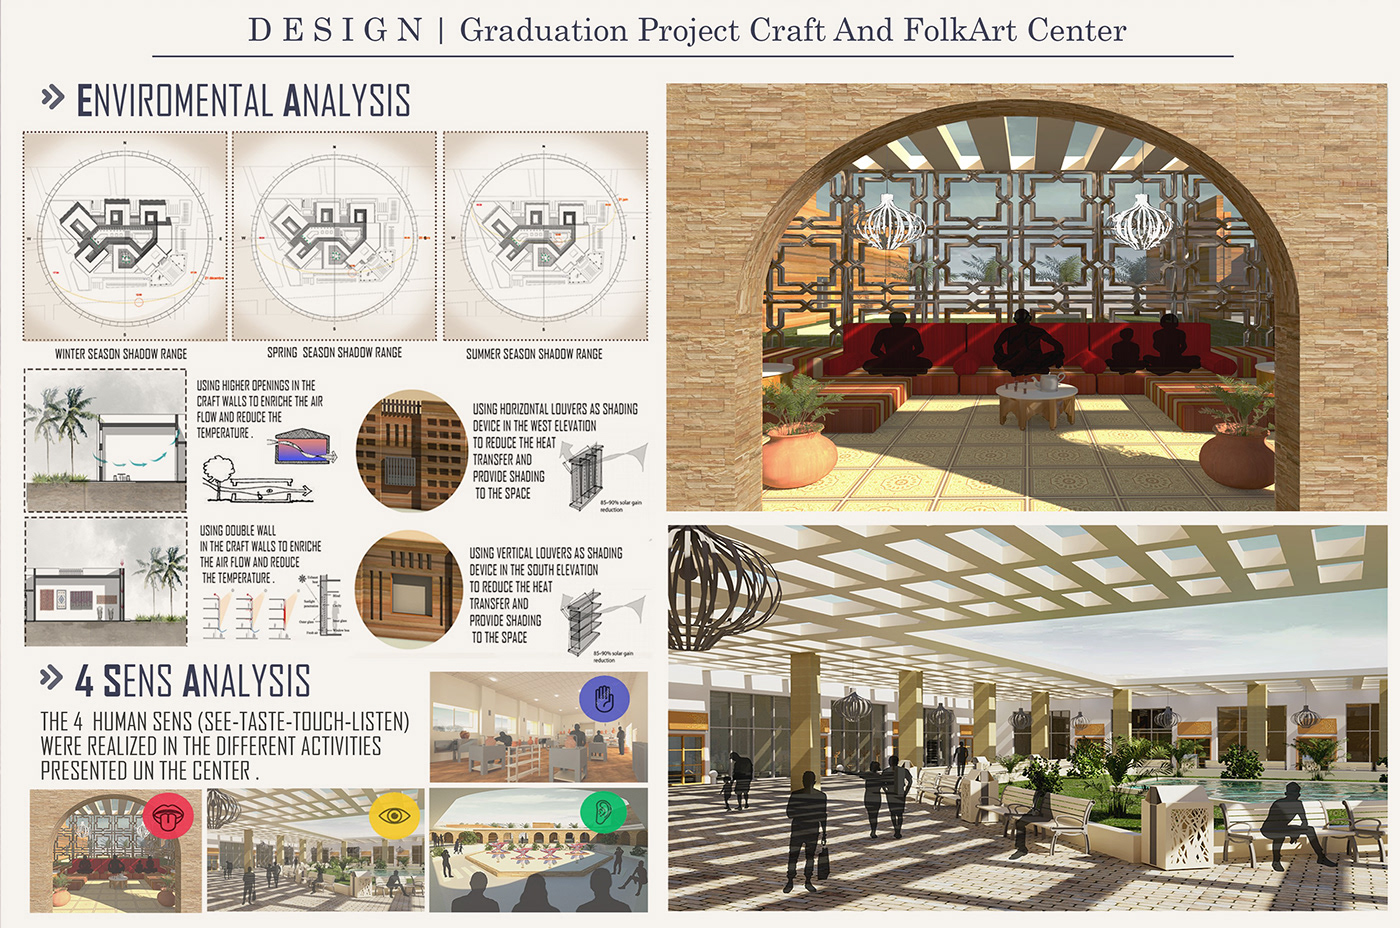 #architectural_design #architecture #Architecture_project #Craft #craft_center #Design #folkart #Graduation_Project #interior_design